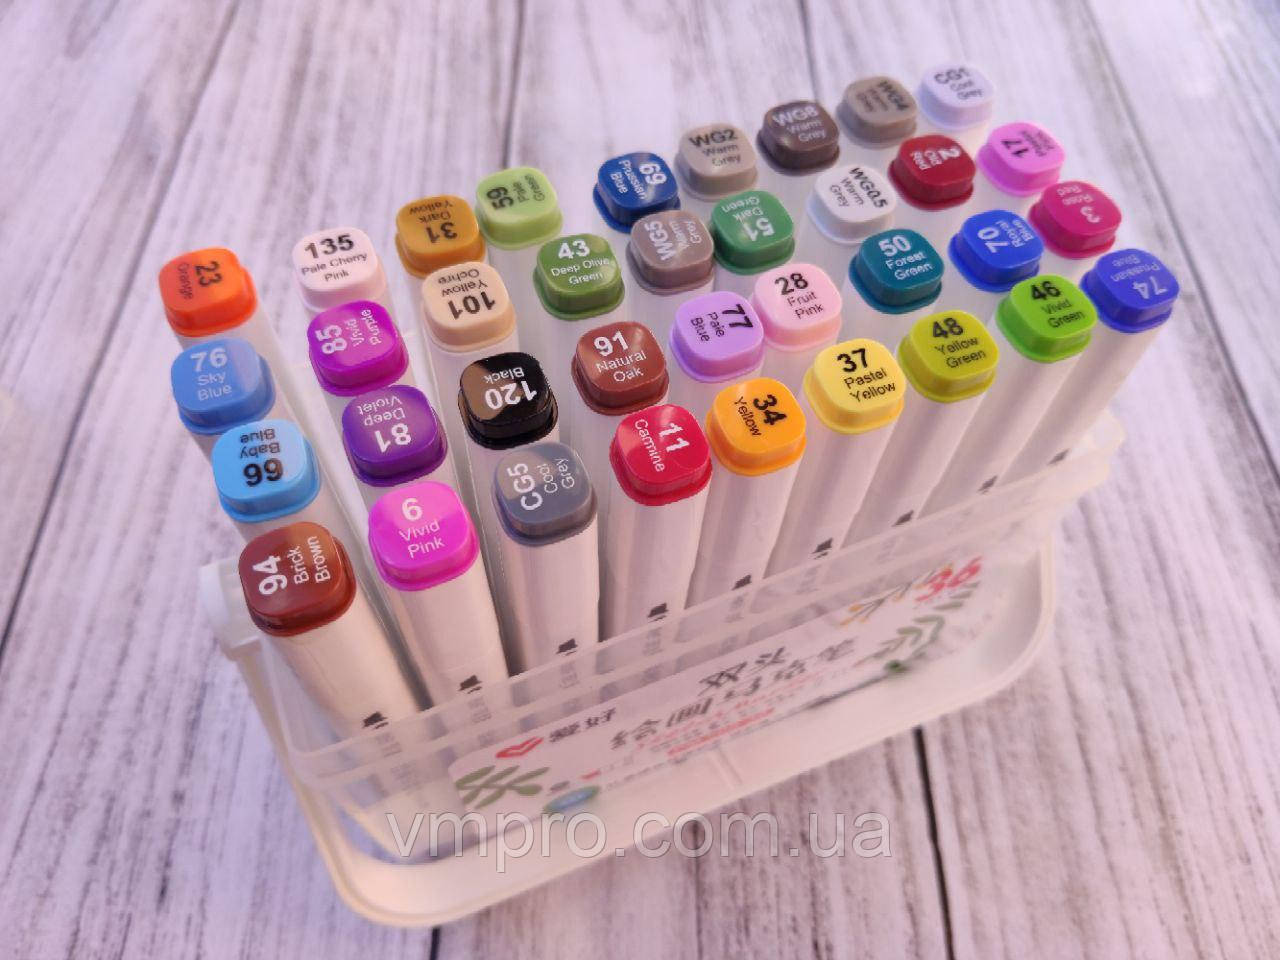 Скетч маркери "Sketch marcer" набір 36 кольорів, Aihao набір у пластиковому боксі.